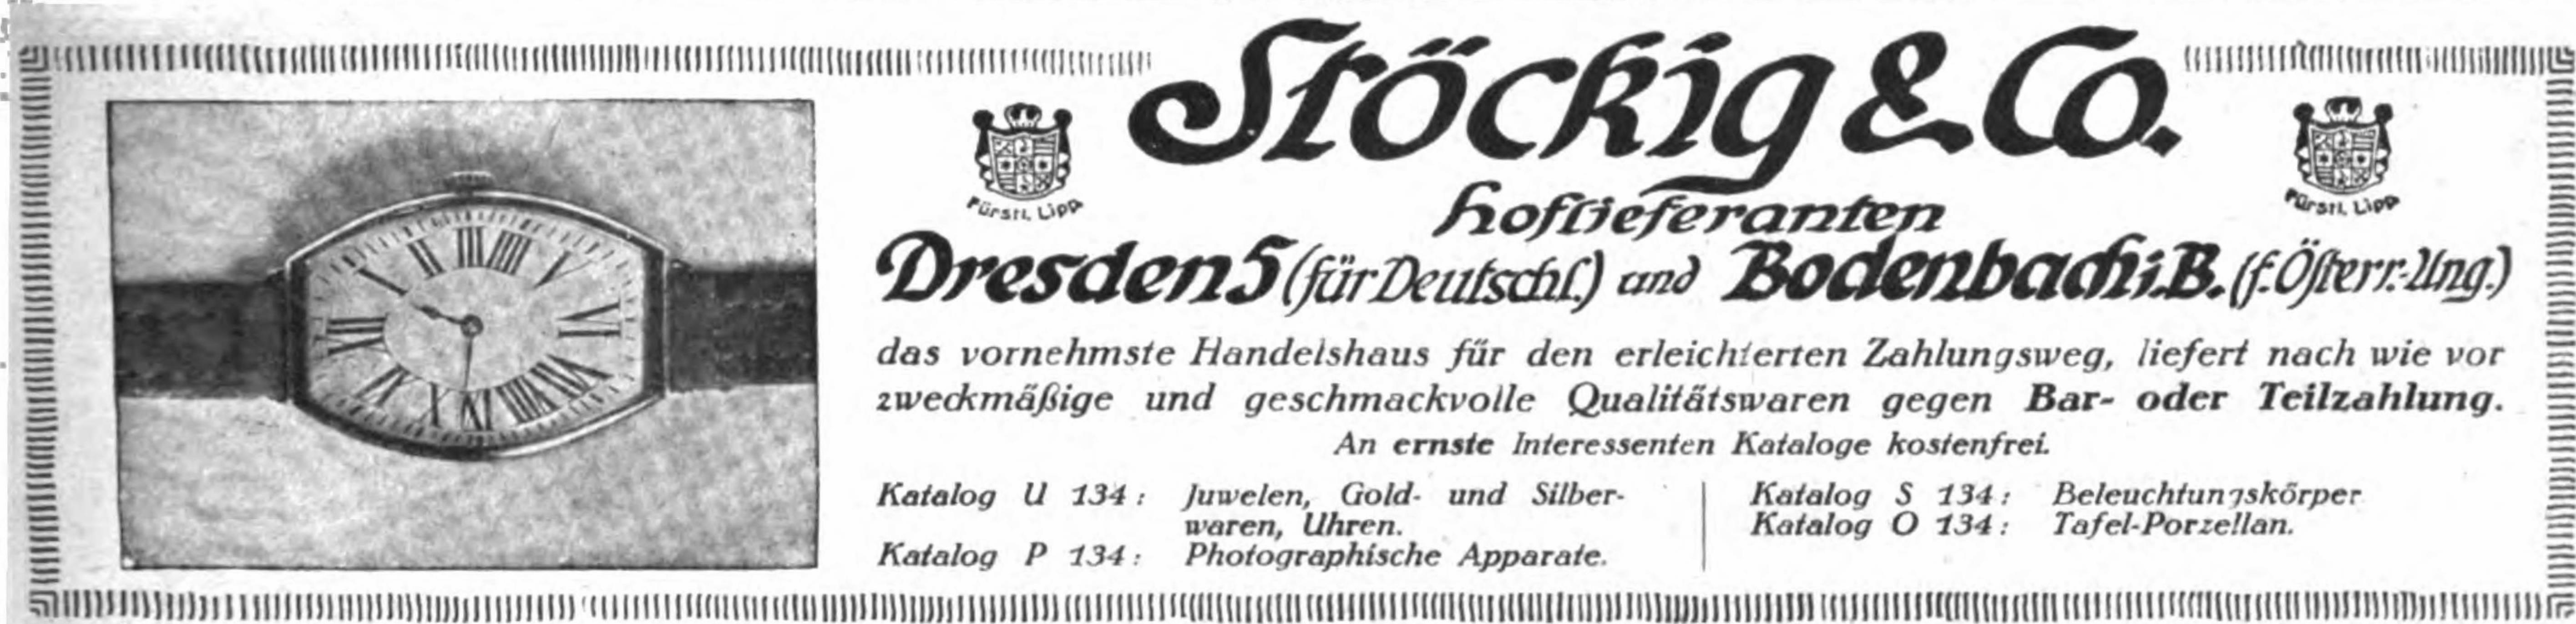 Stoeckig 1917 680.jpg